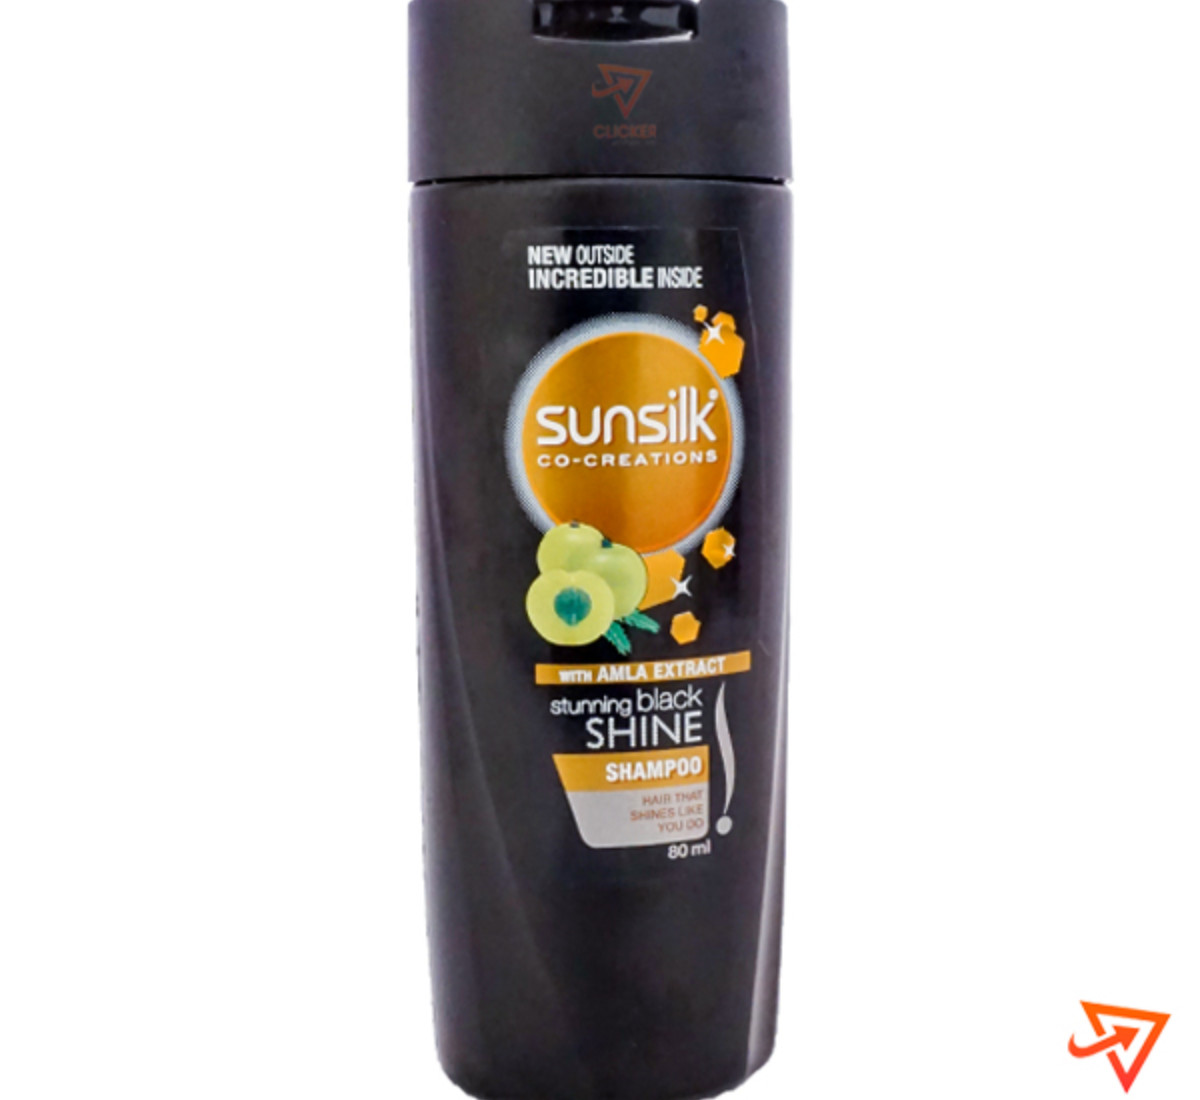 Clicker product 80ml SUNSILK staning blackshine shampoo 1104